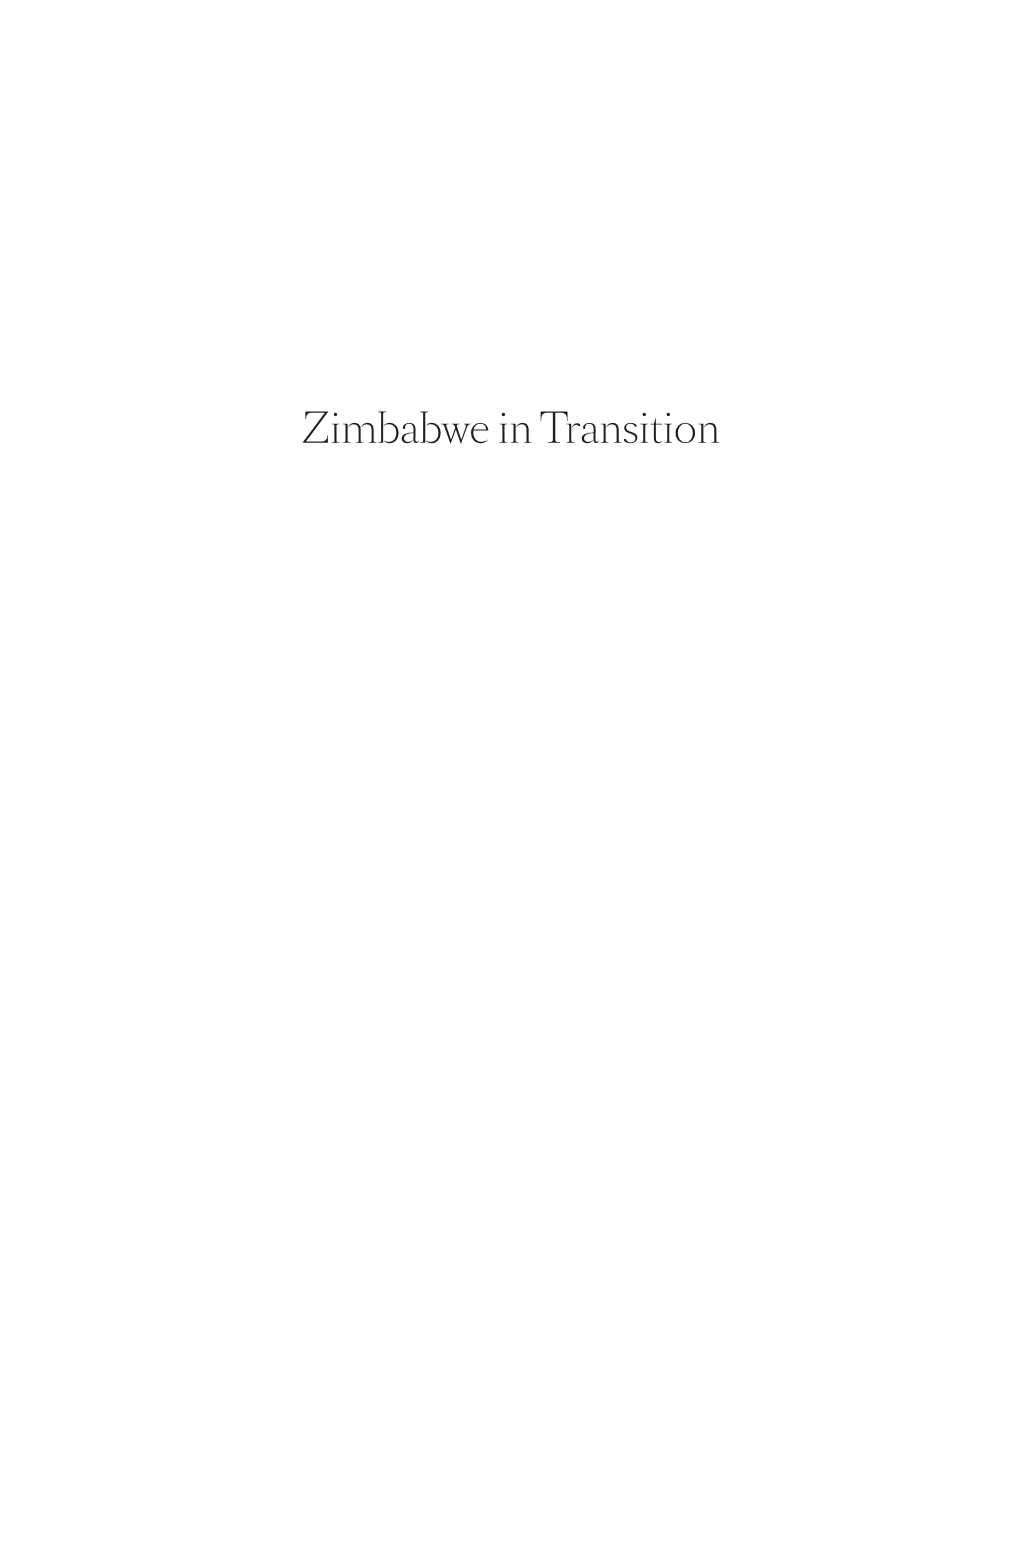 Zimbabwe in Transition